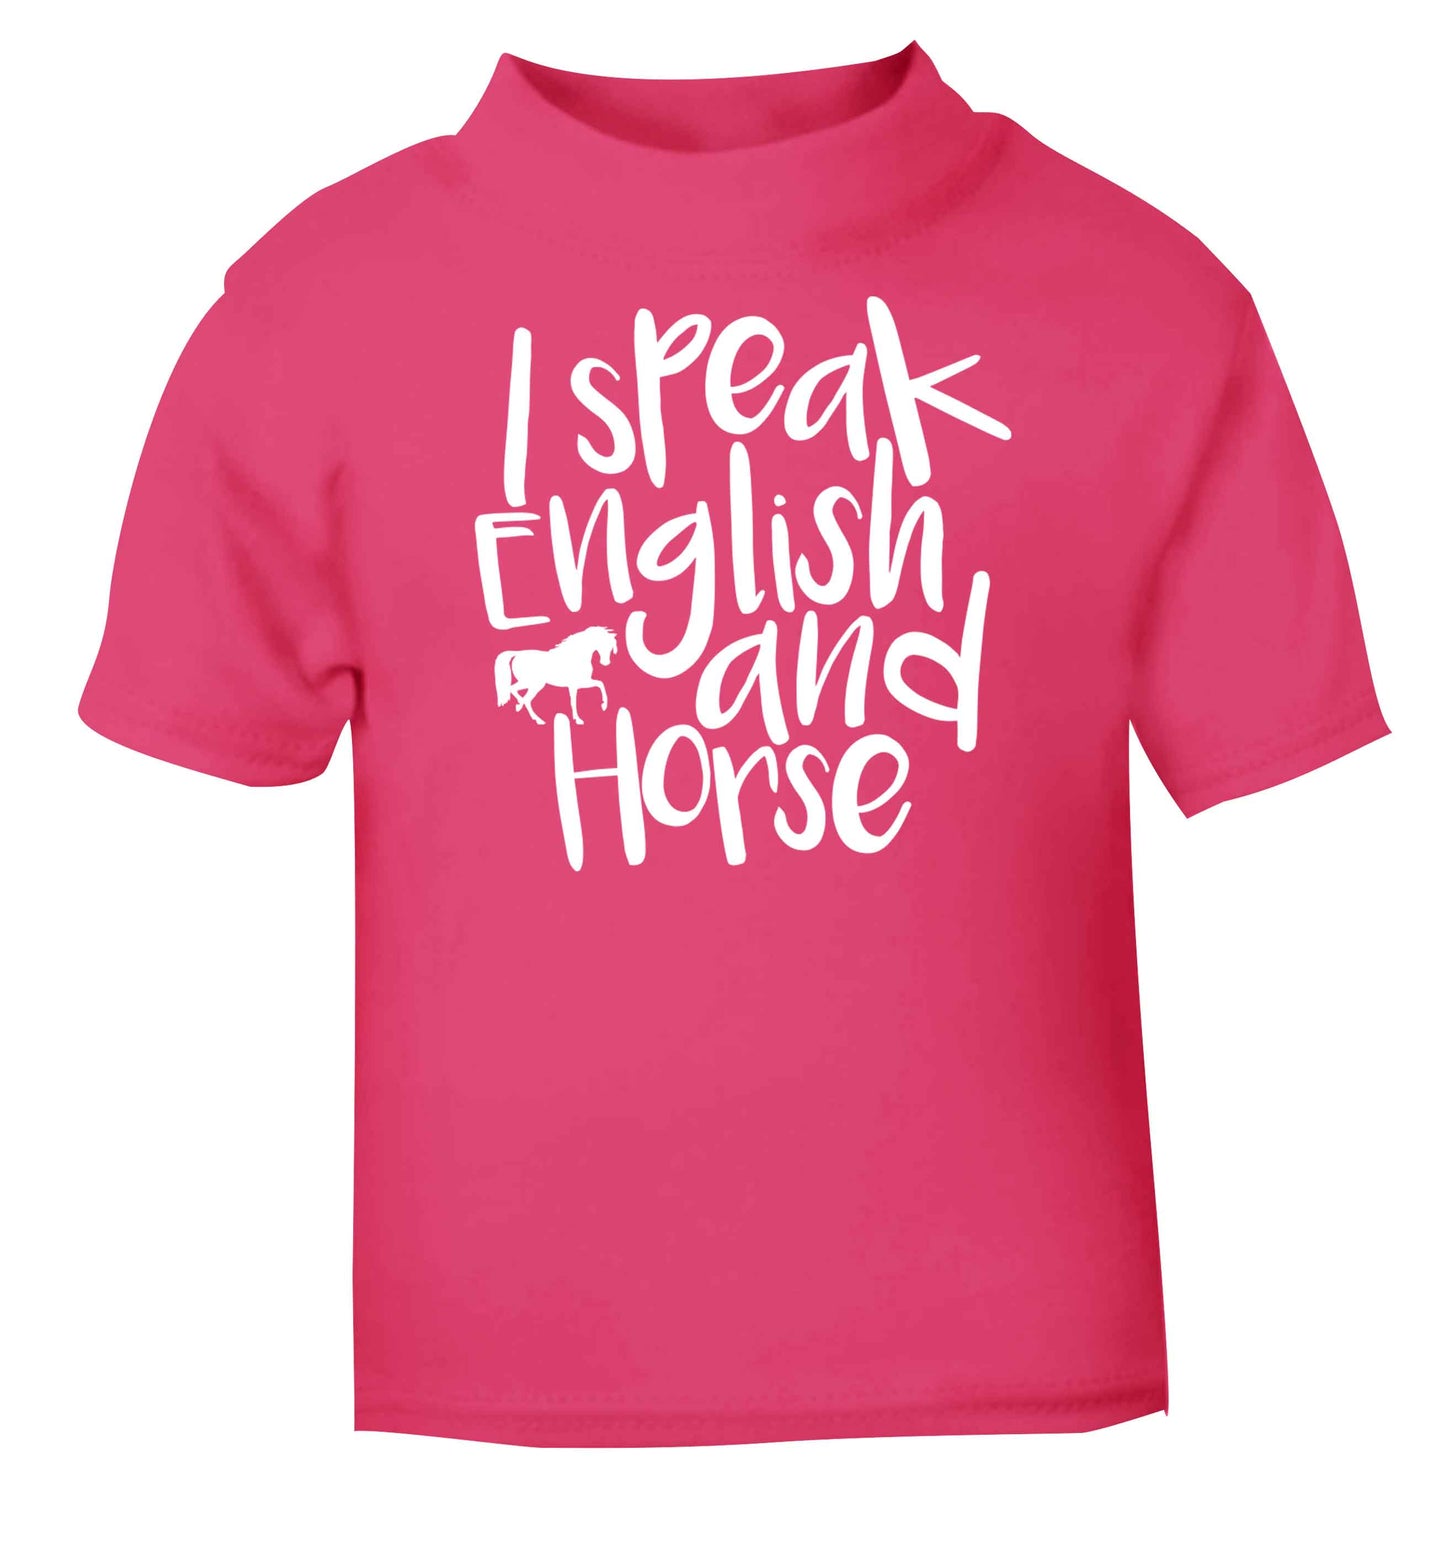 I speak English and horse pink baby toddler Tshirt 2 Years